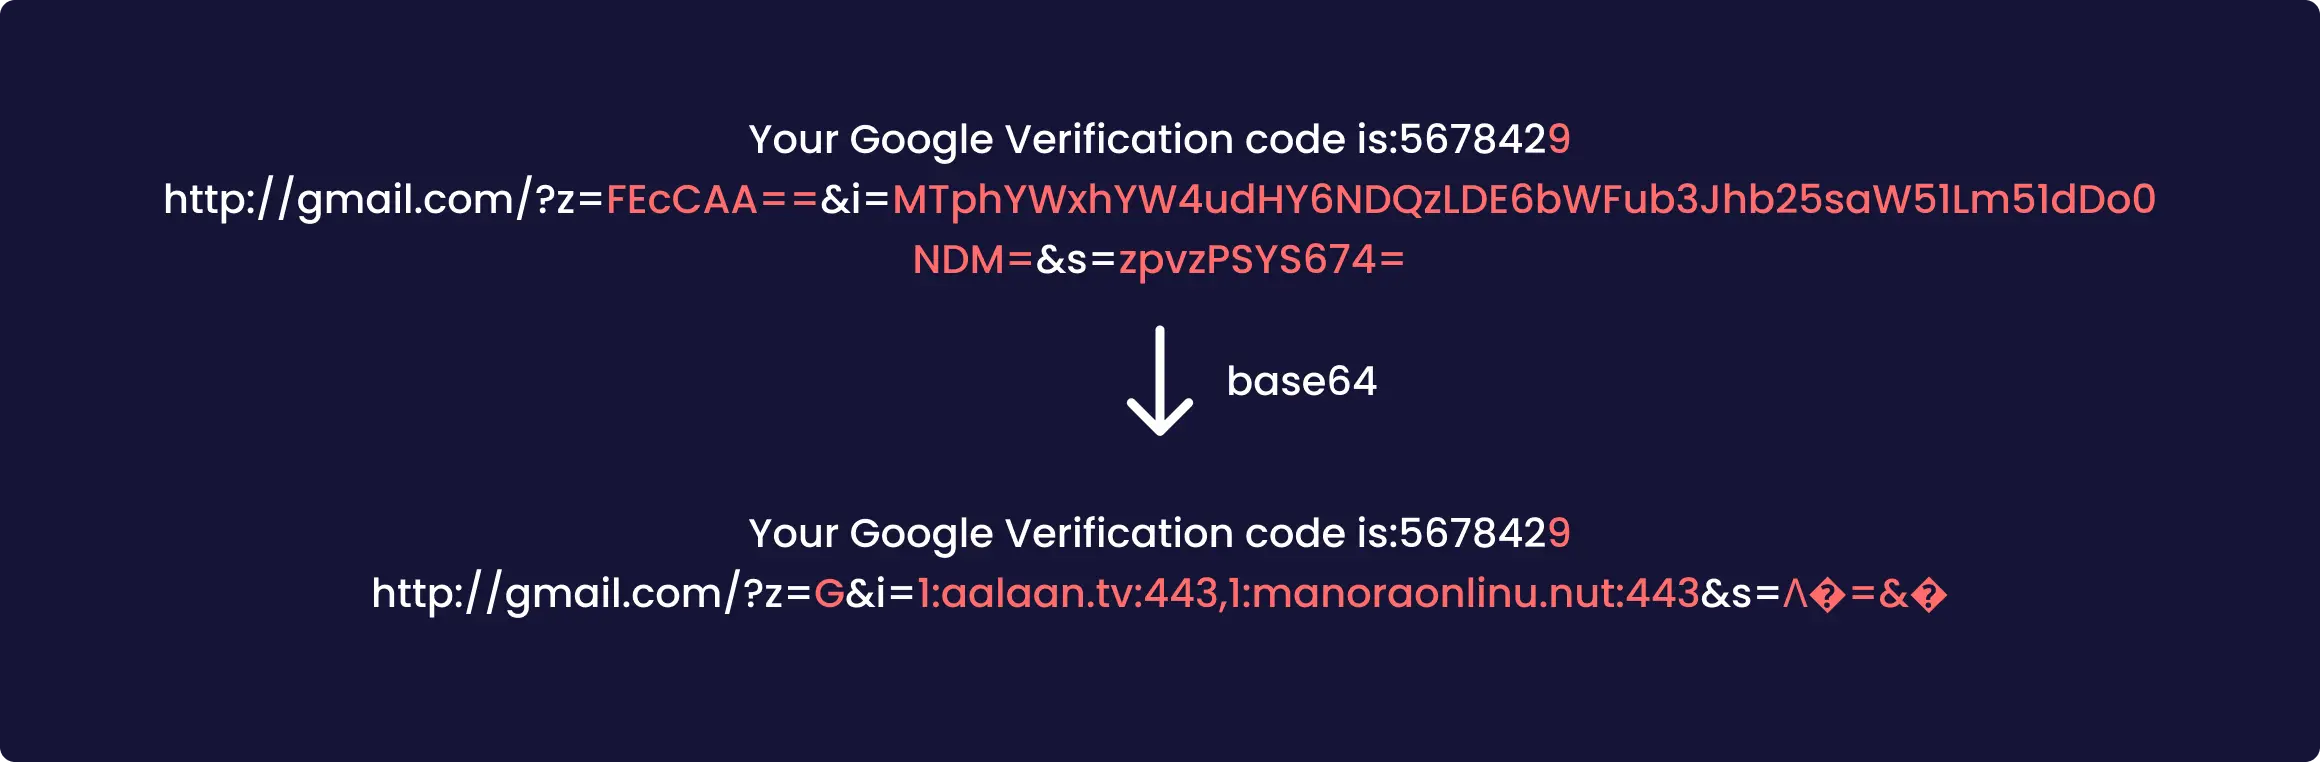 Your Google Verification code is:5678429 https://gmail.com/?z=G&i=1:aalaan.tv:443,1:manoraonlinu.nut:443&s=Λ�=&�